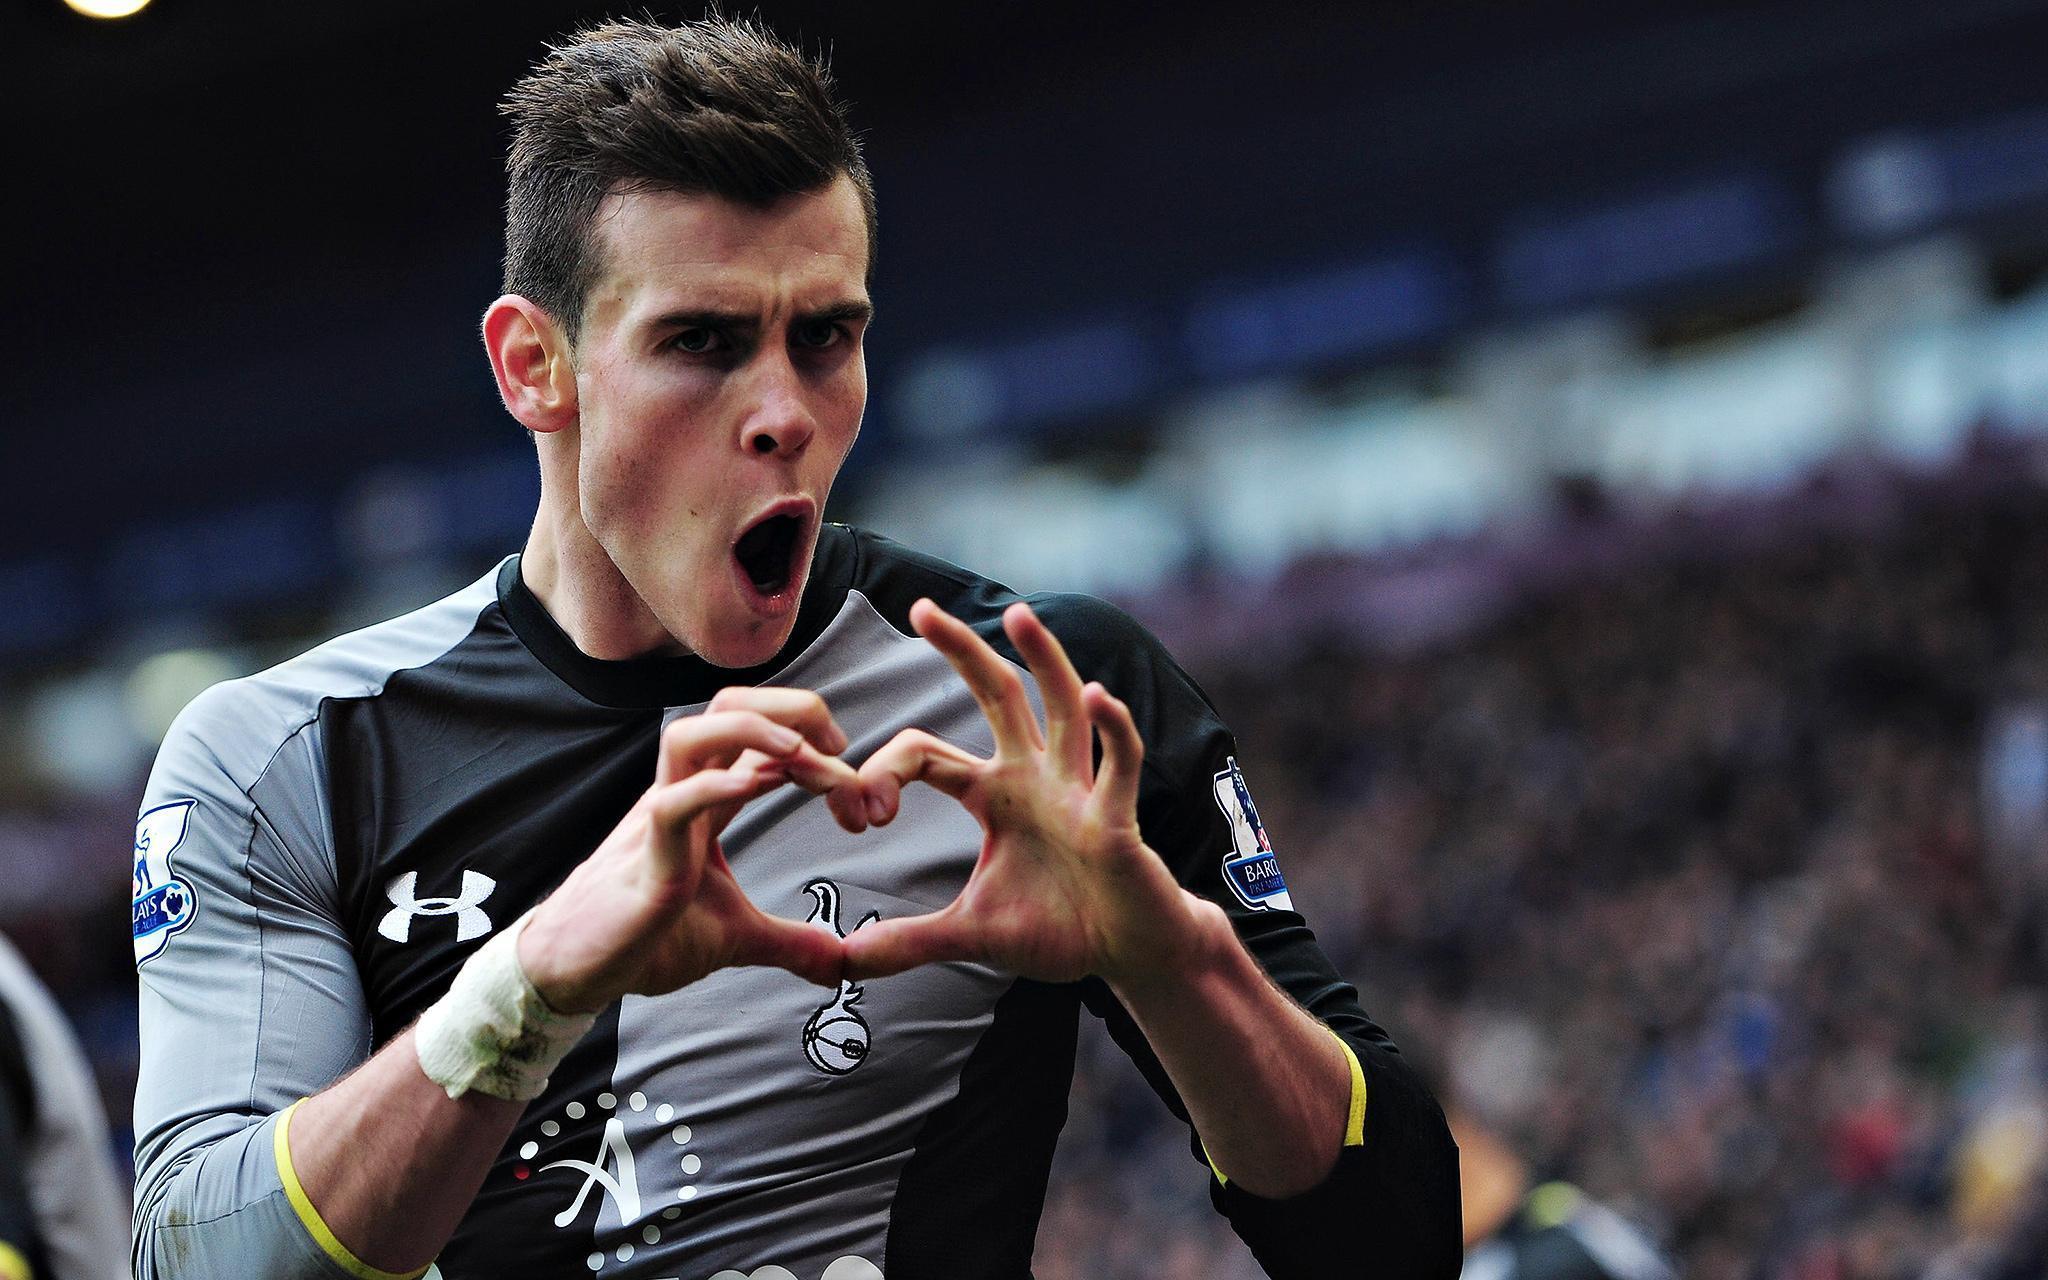 Free Download Gareth Bale Background